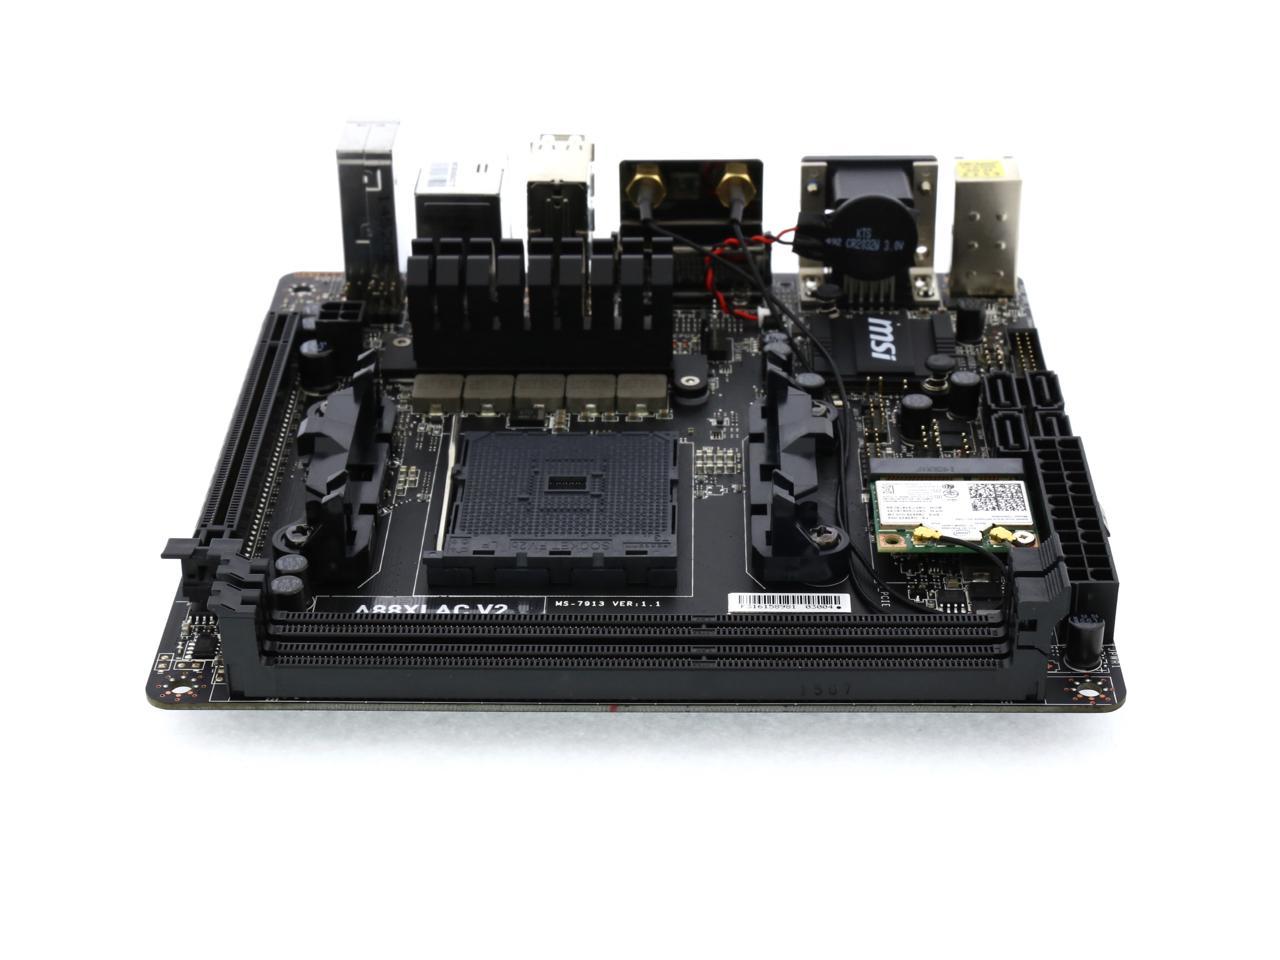 MSI A88XI AC V2 FM2+ Mini ITX AMD Motherboard - Newegg.com